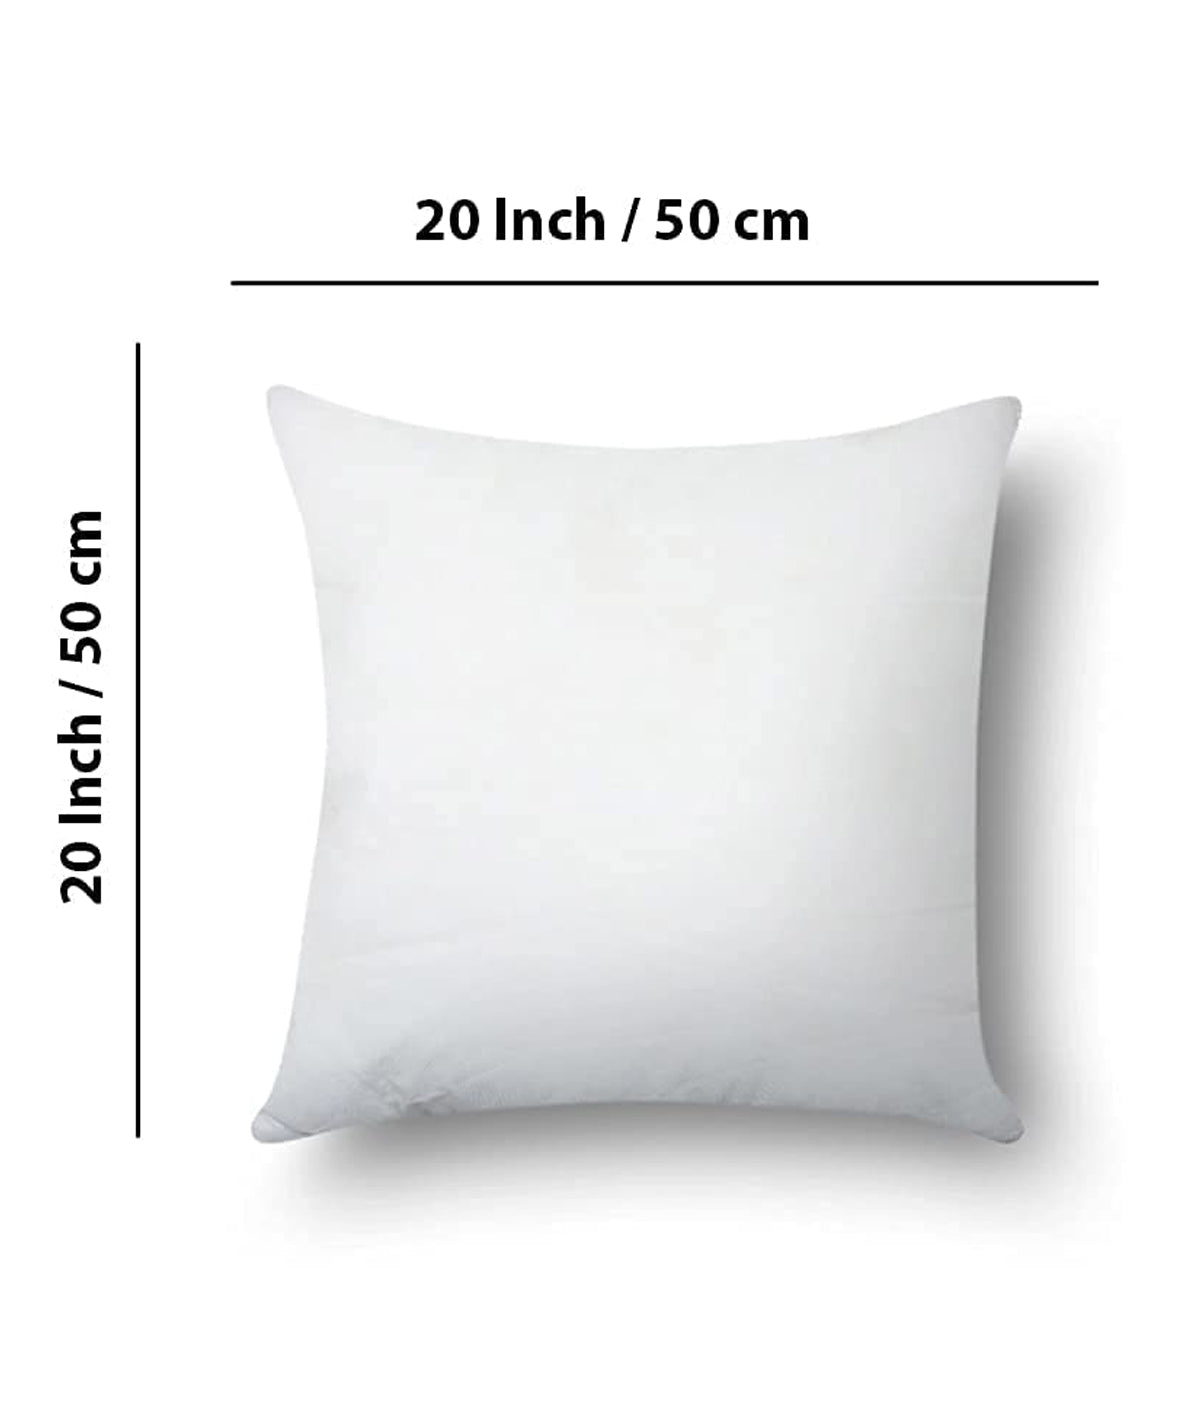 Pluchi Square Cushion Filler (50 cm x 50 cm) (20" x 20")